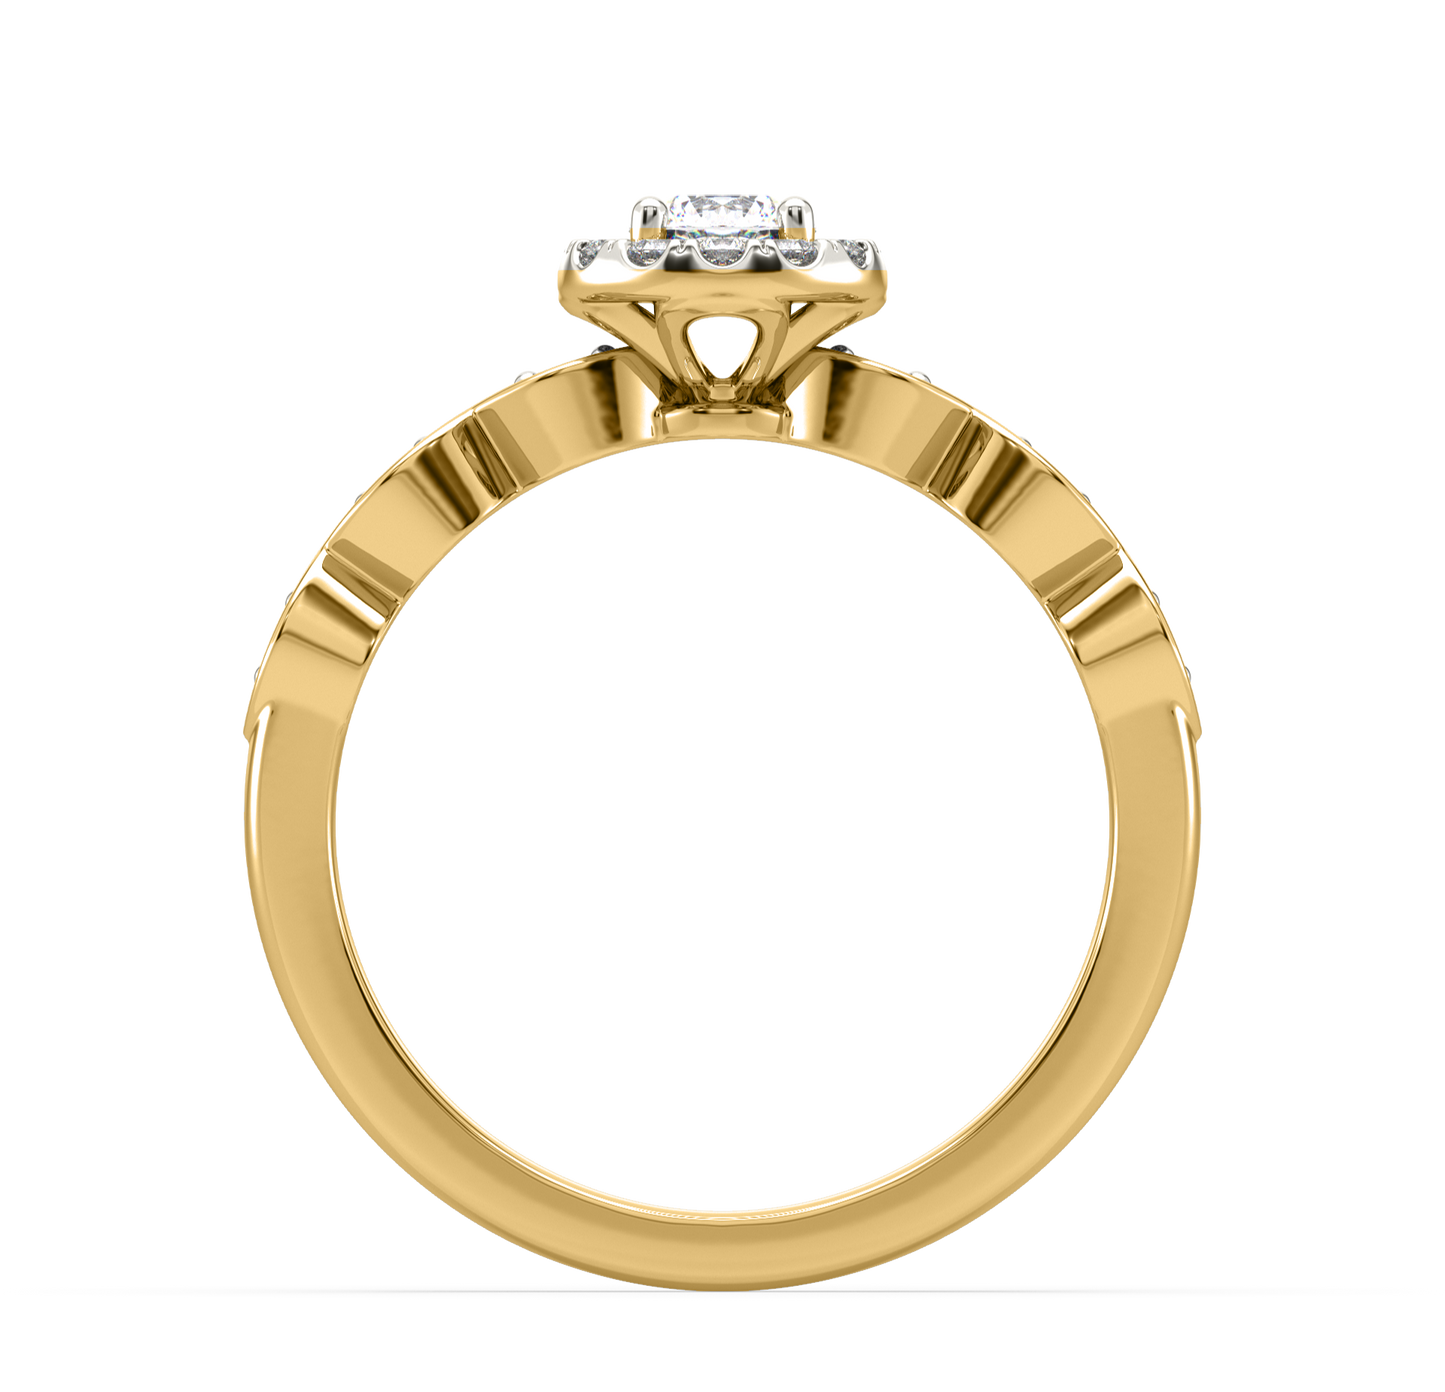 Customised ring RG21013-PH21049